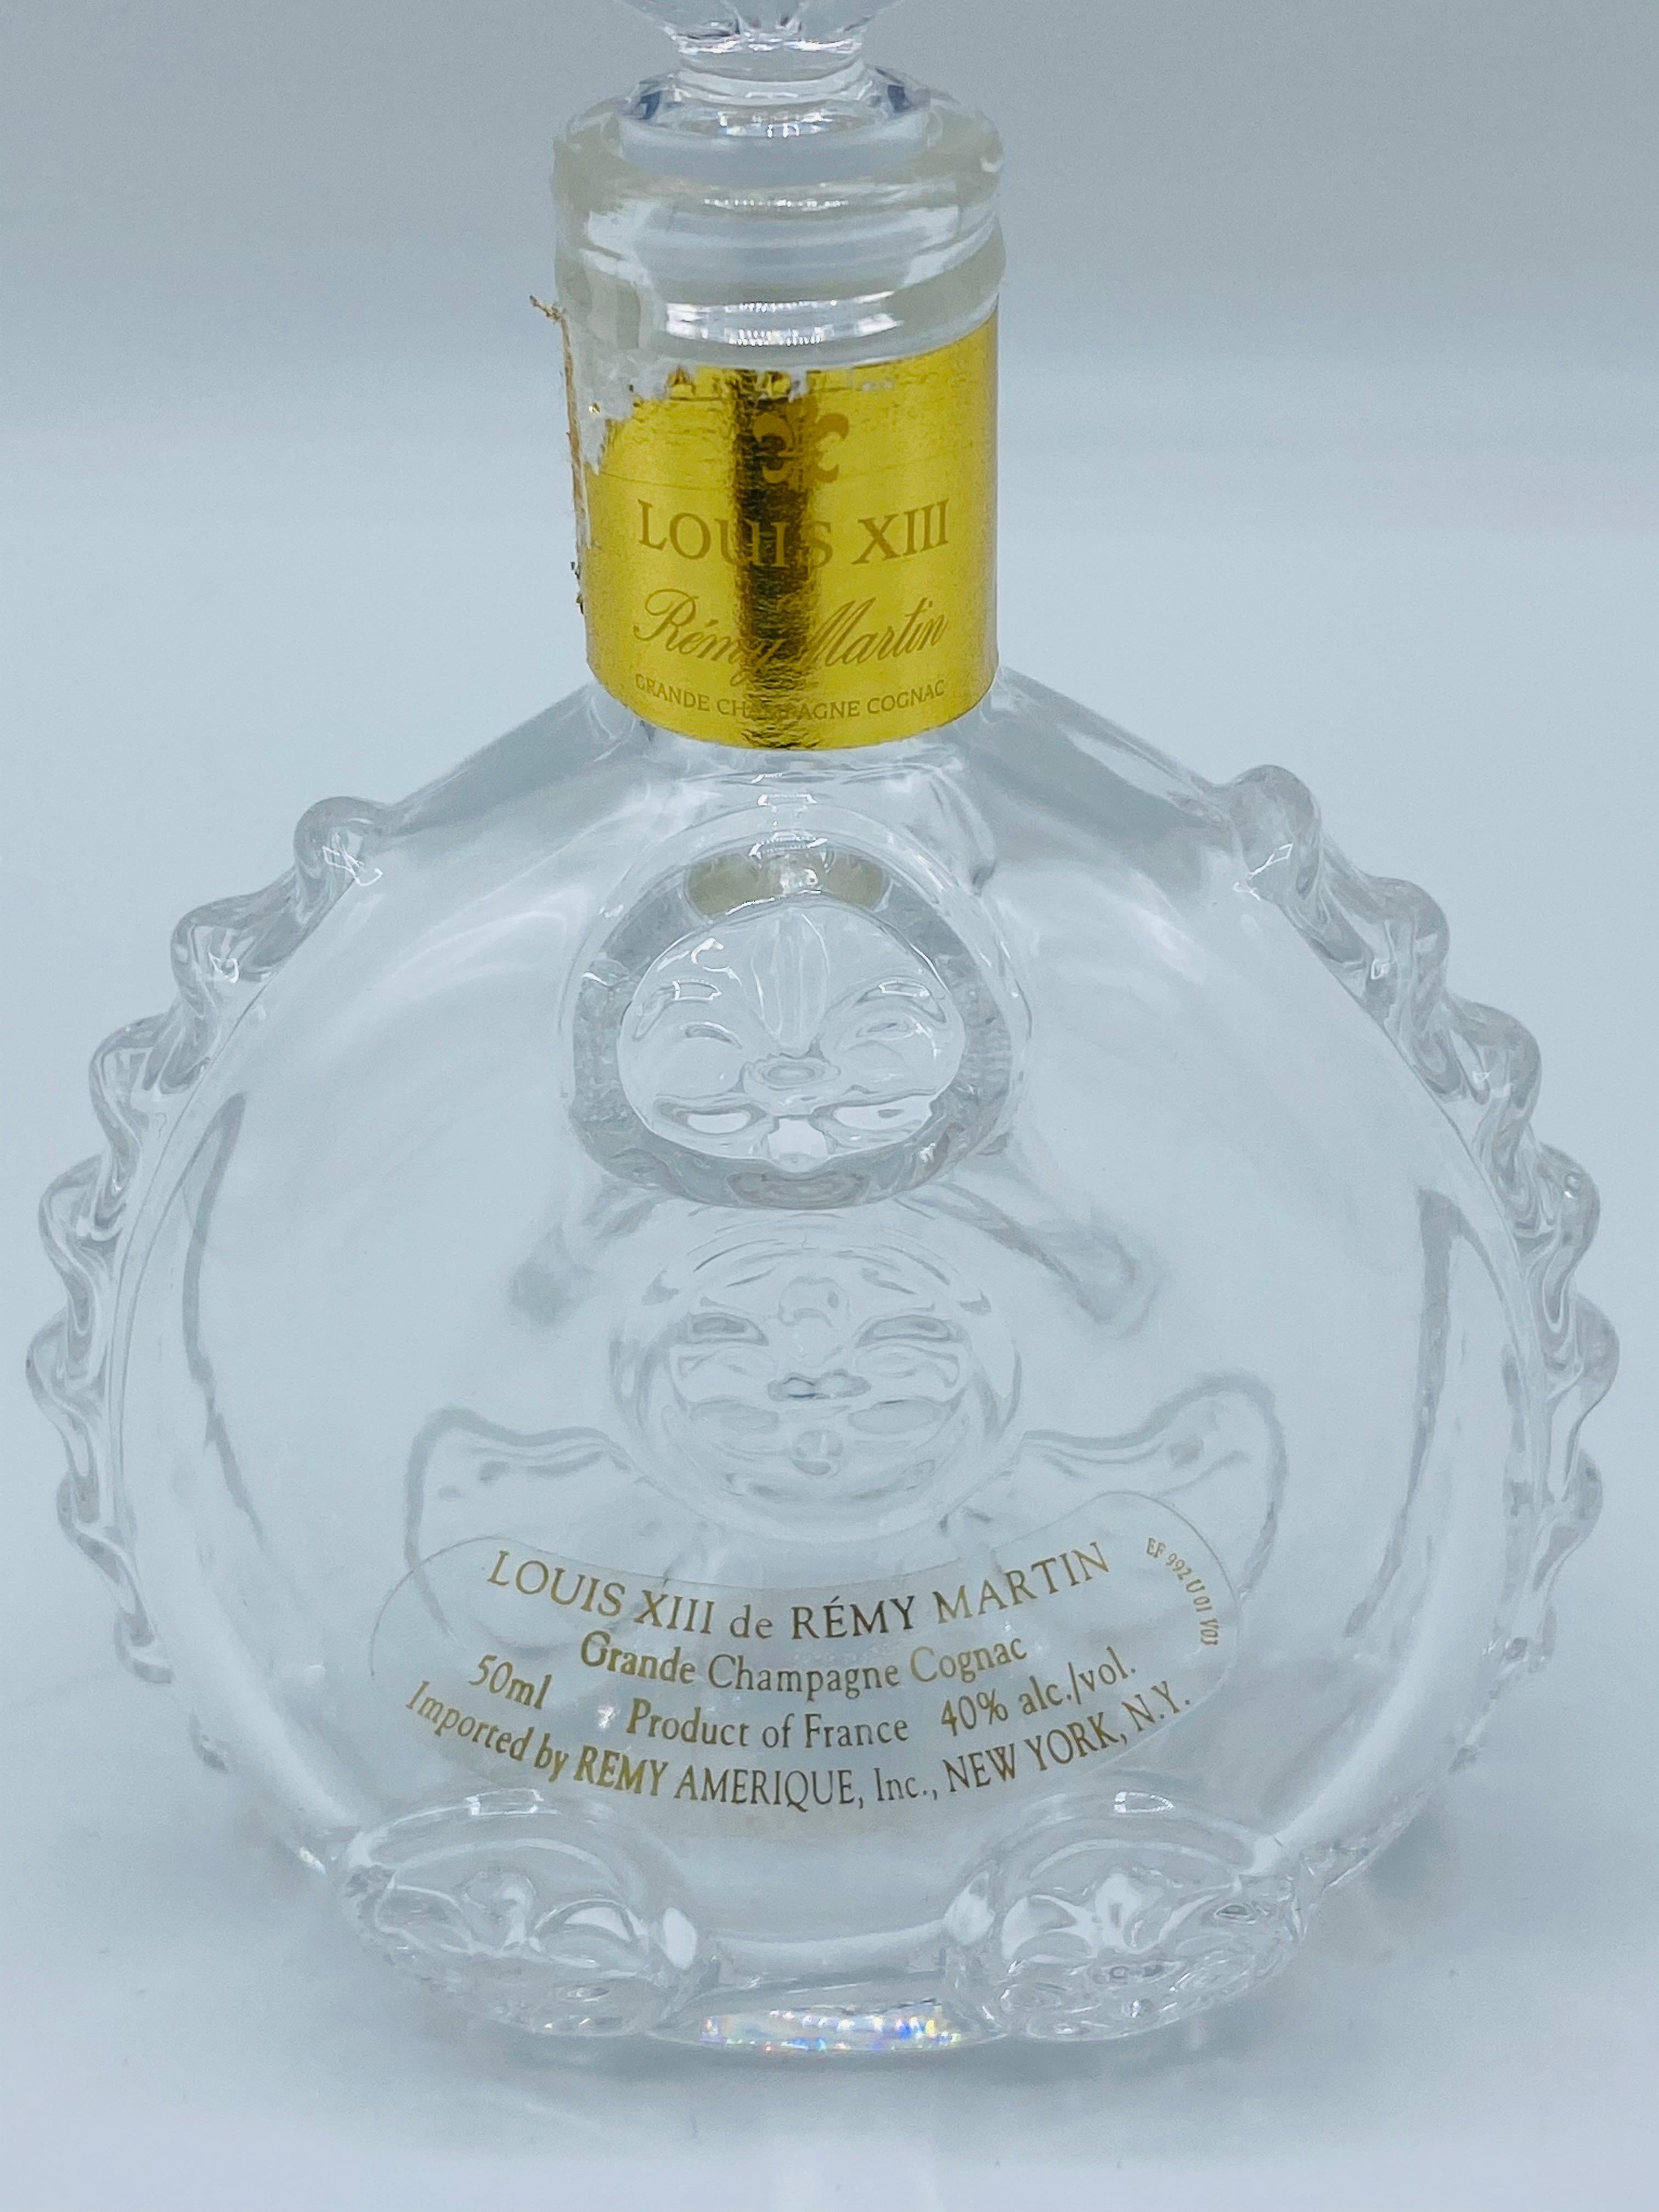 Vintage Baccarat Crystal Louis XIII Remy Martin Cognac Liquor Decanter Set, 50ml 5